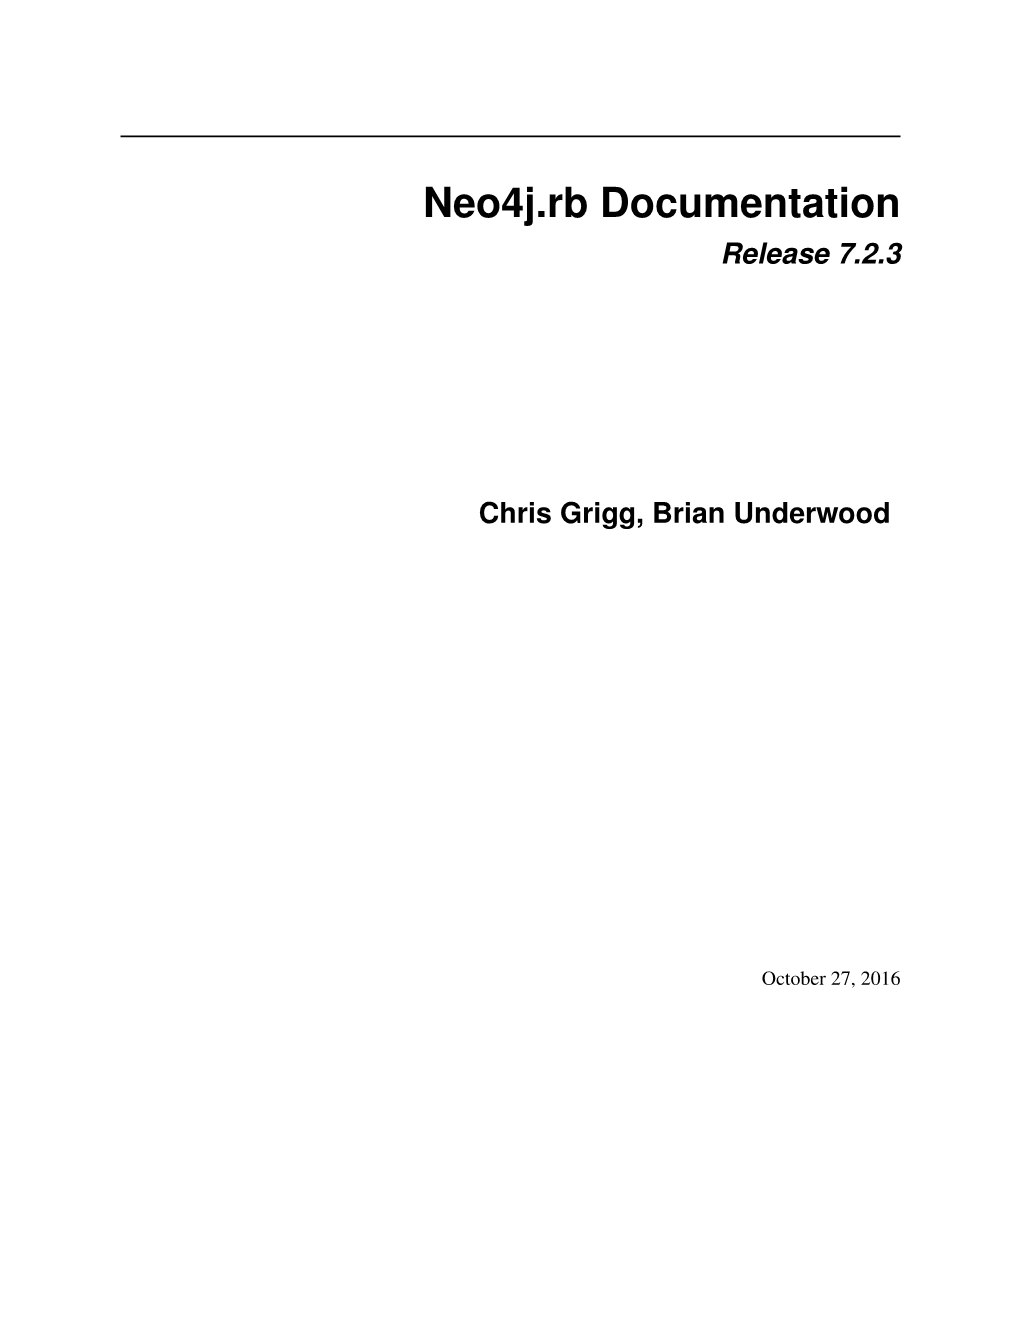 Neo4j.Rb Documentation Release 7.2.3